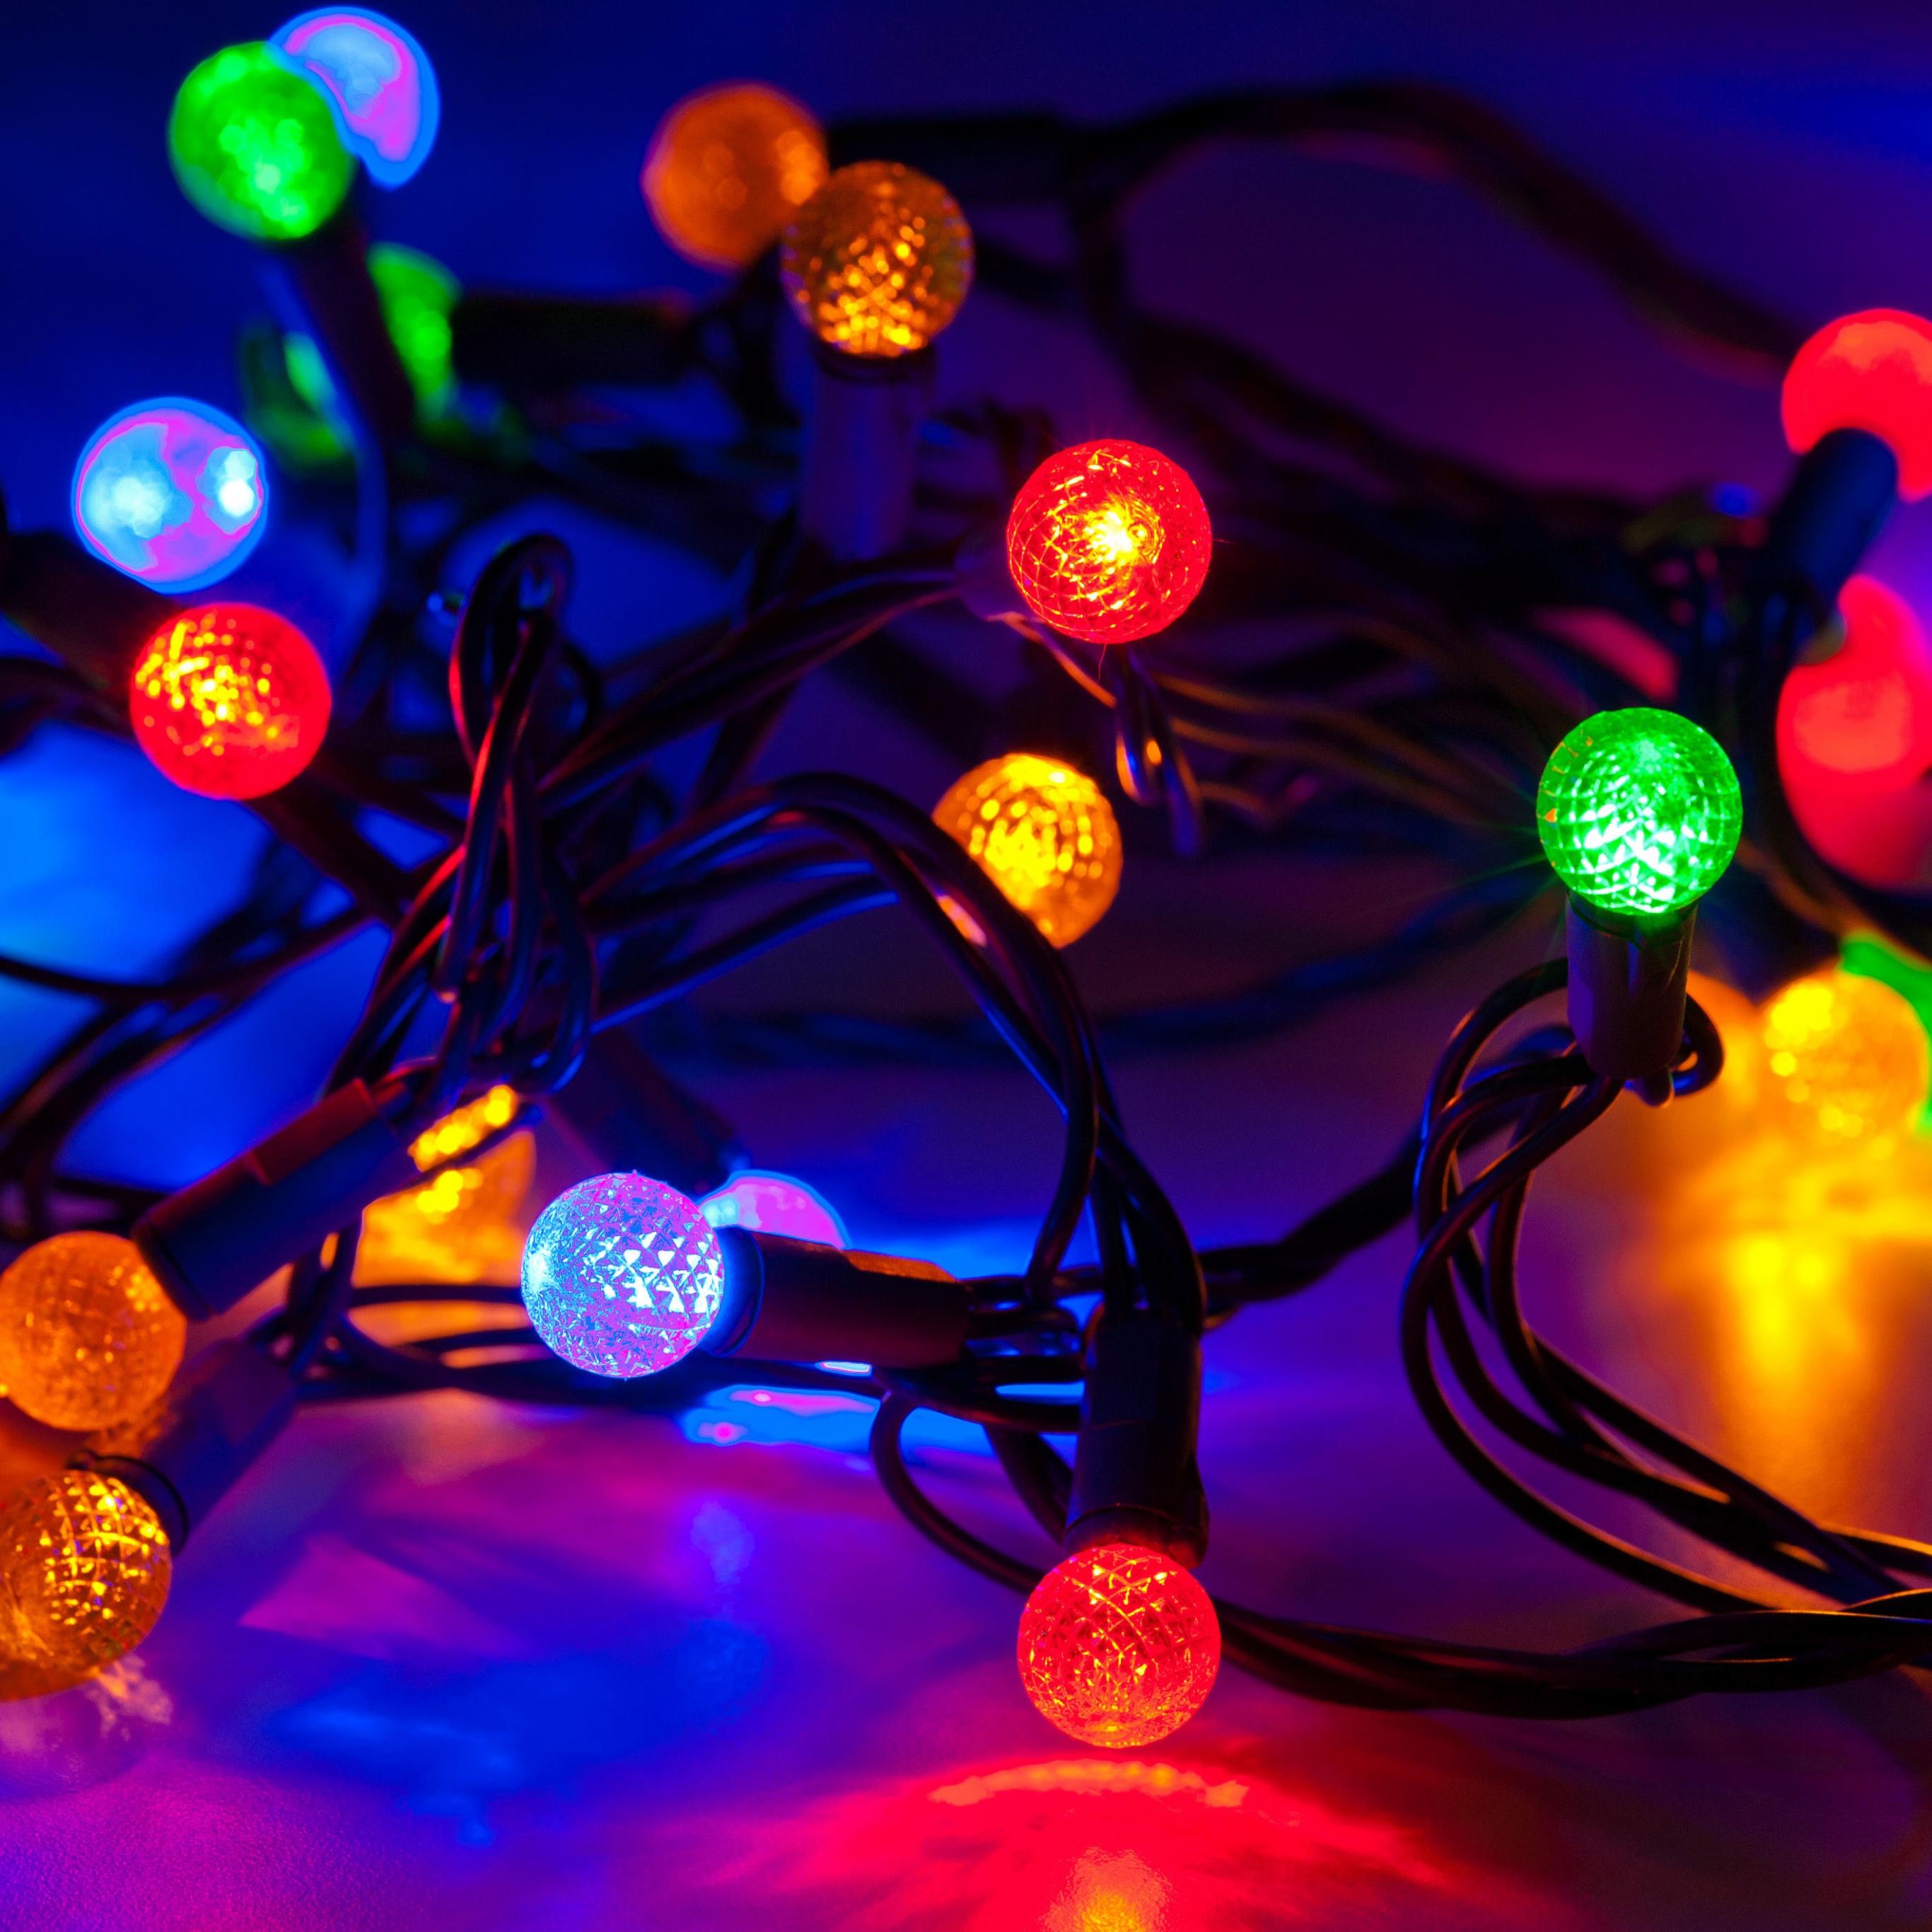 Party lights Wallpaper 4K, Christmas lights, Celebrations/Christmas, #253